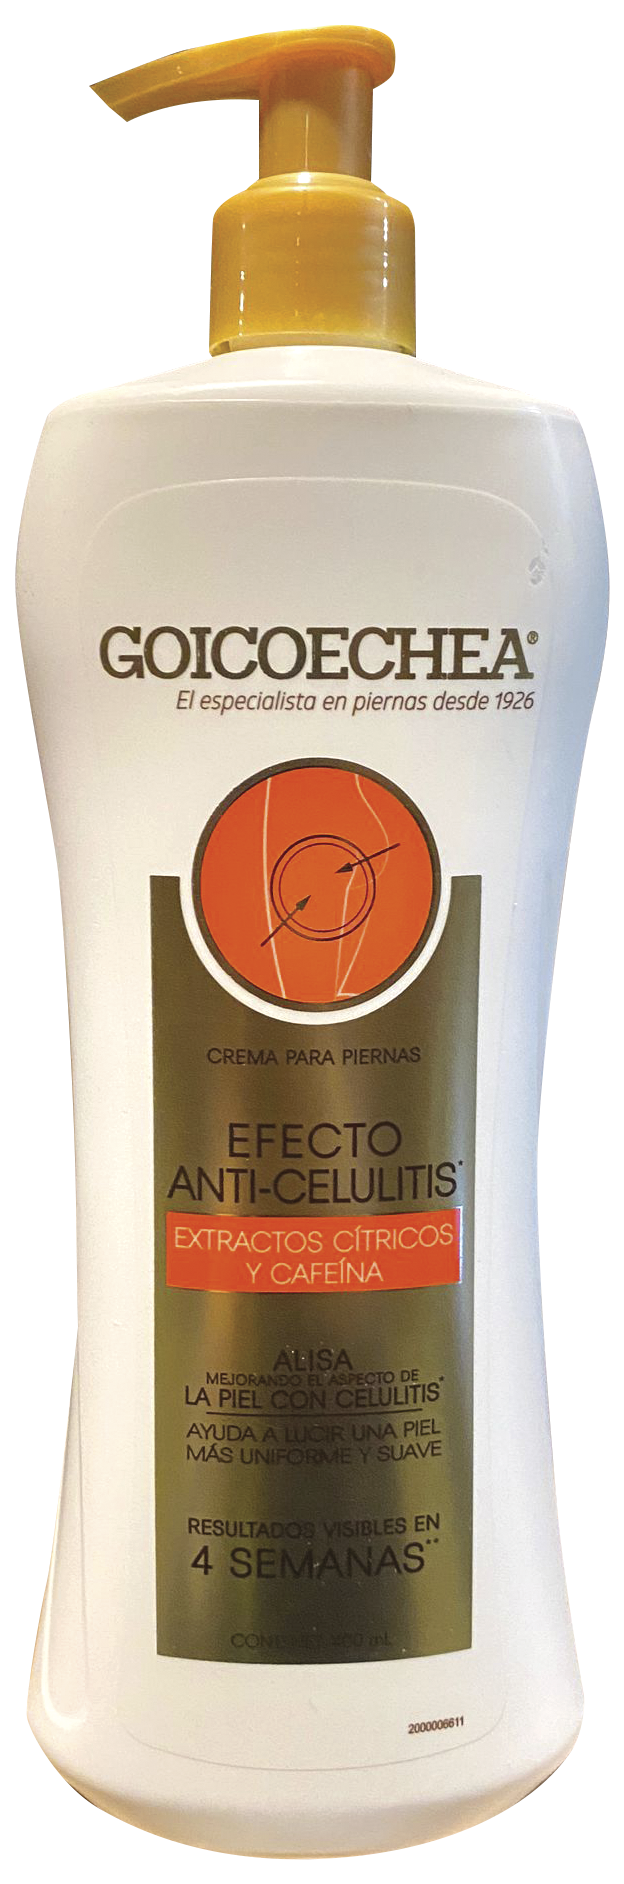 Goicochea 400ml MX Extractos Citricos y Cafeina Piel Naranja